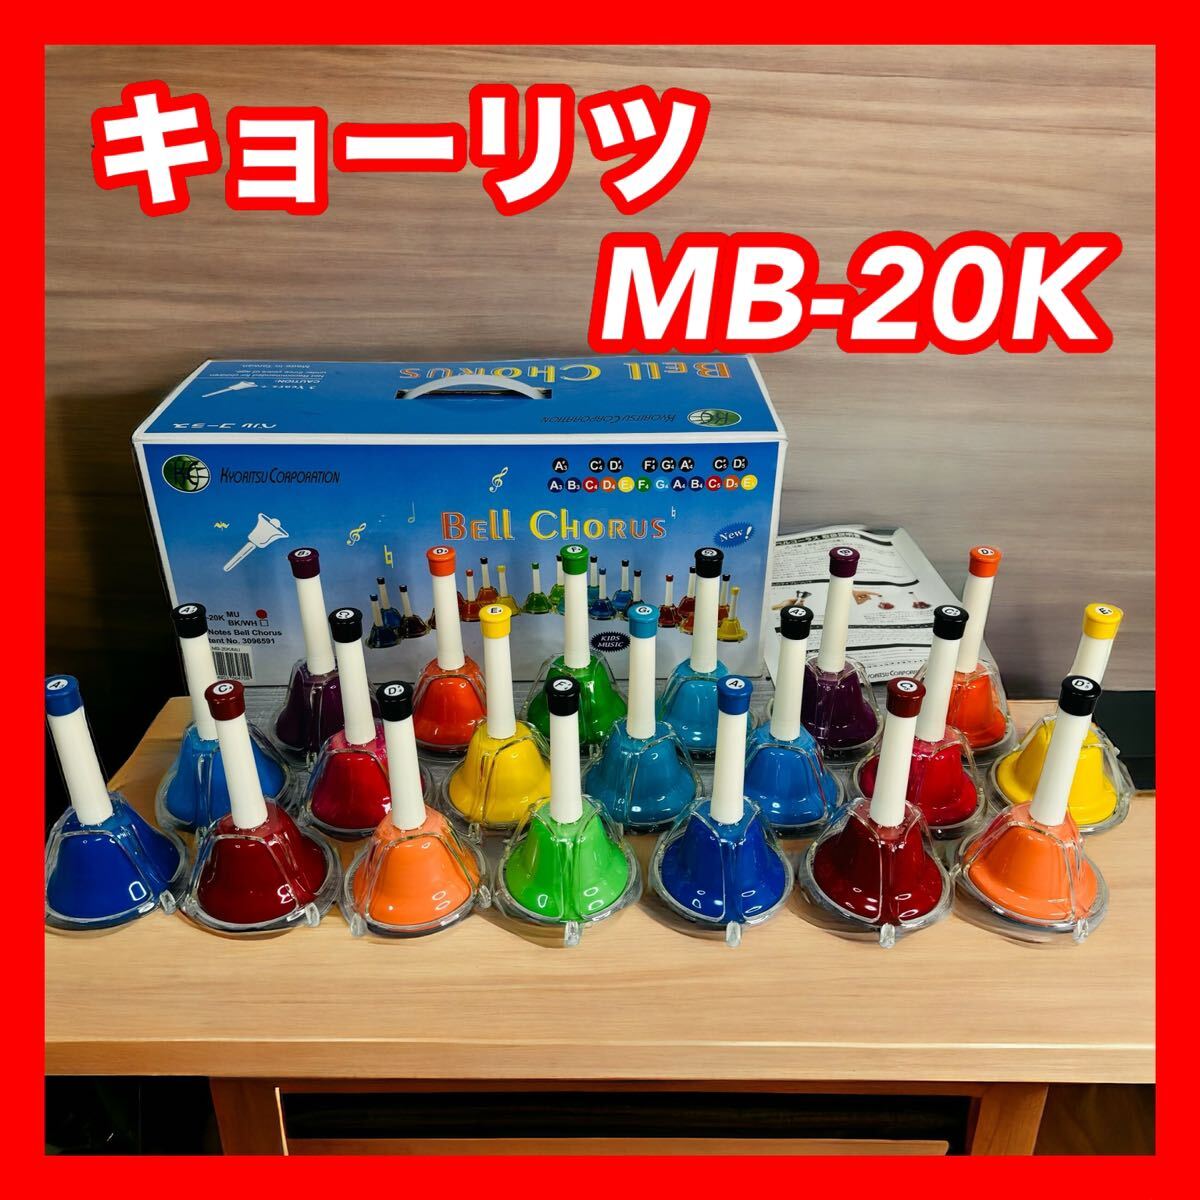 KCkyo-litsuMB-20K handbell 20 sound bell Chorus 